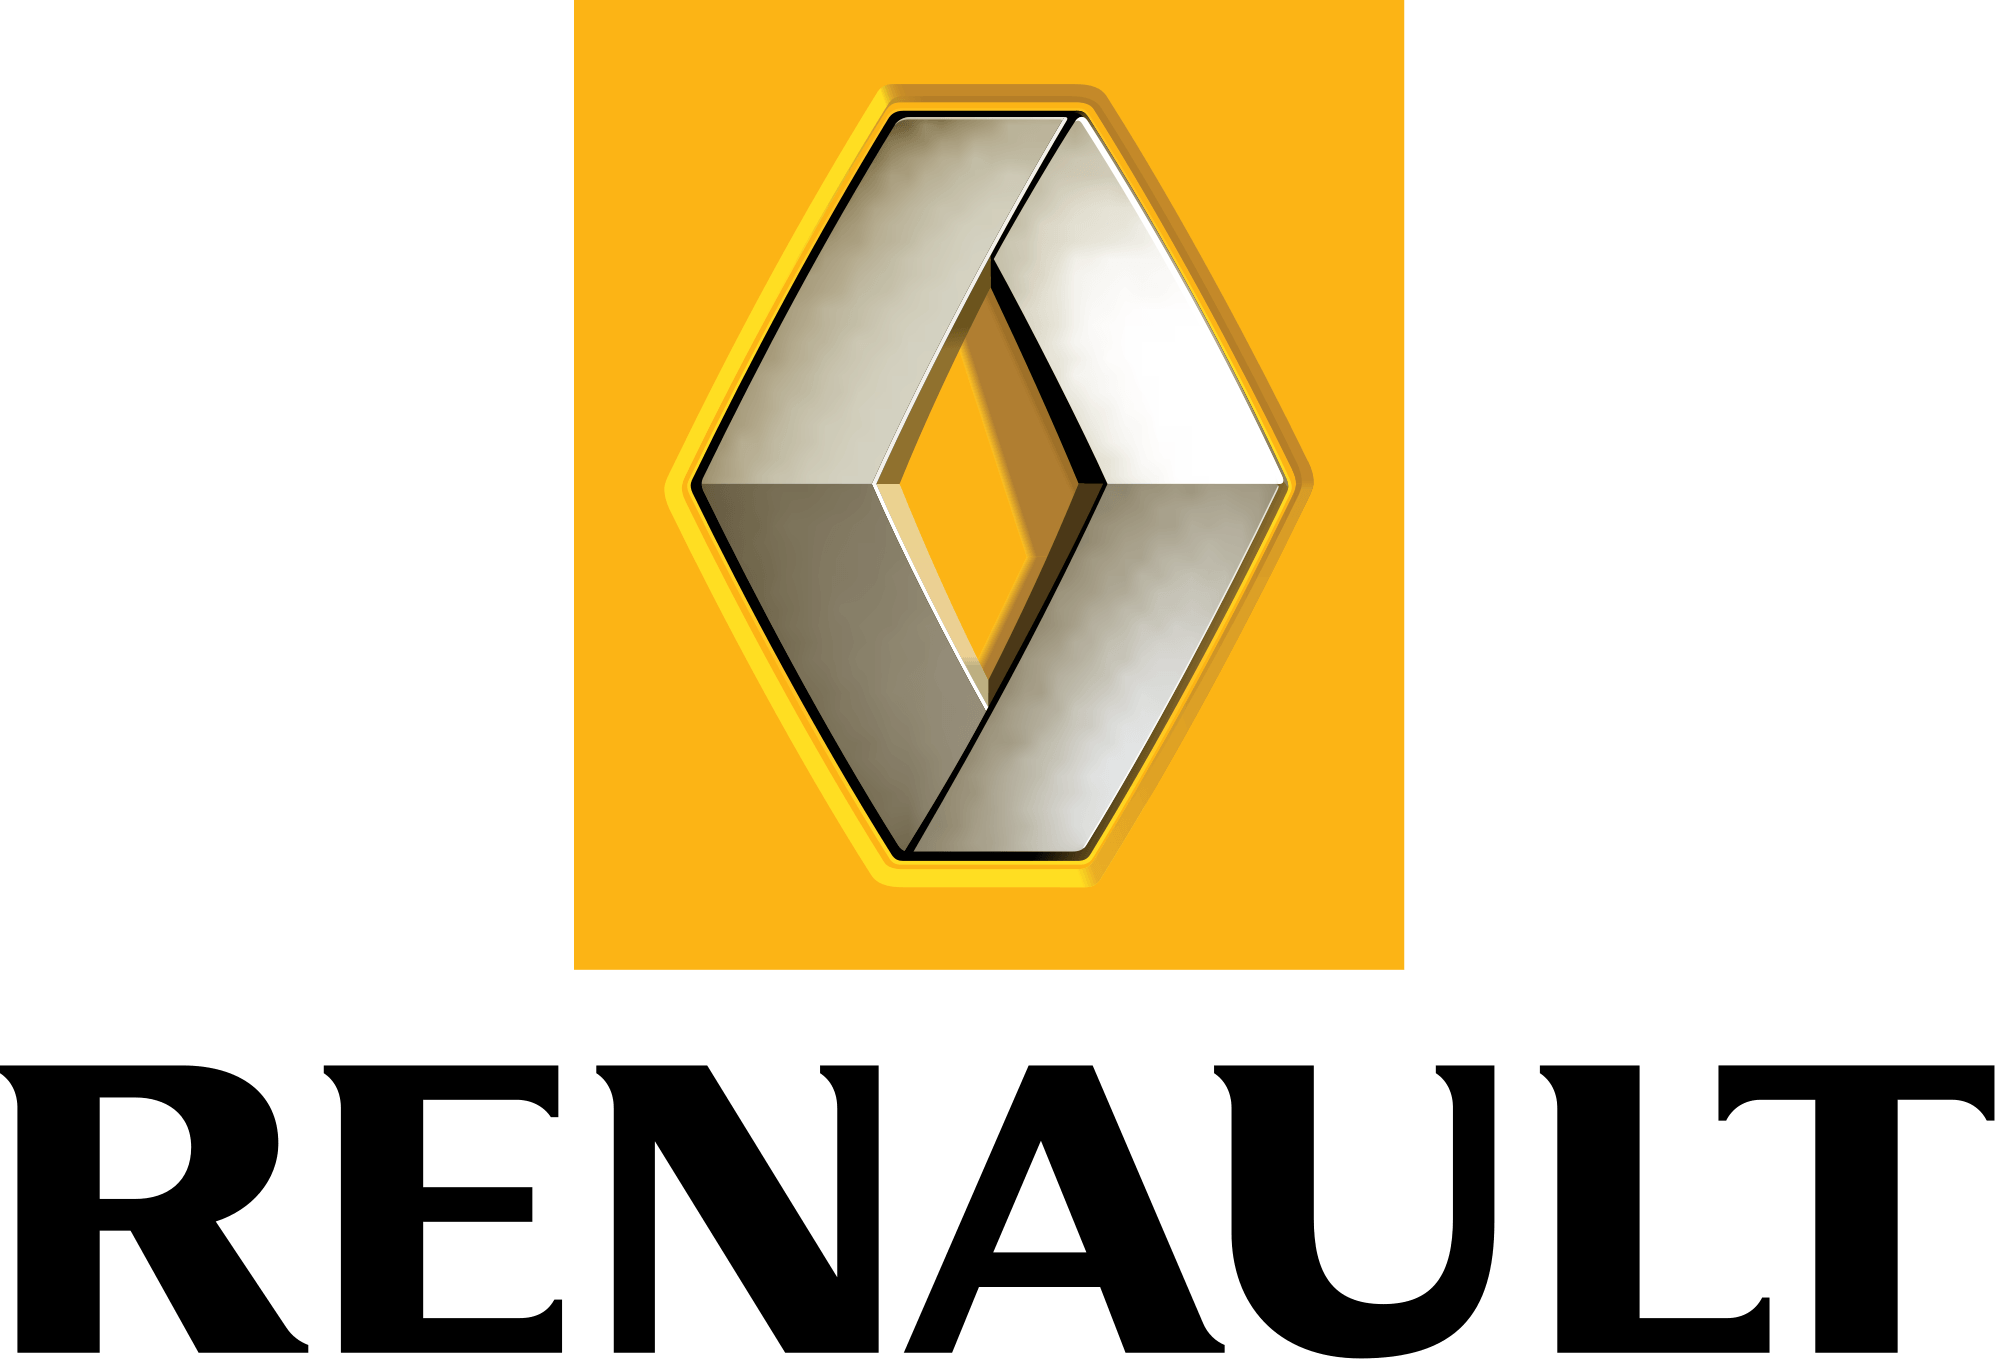 Reno Logo - Renault Logo, Renault Car Symbol Meaning and History | Car Brand ...